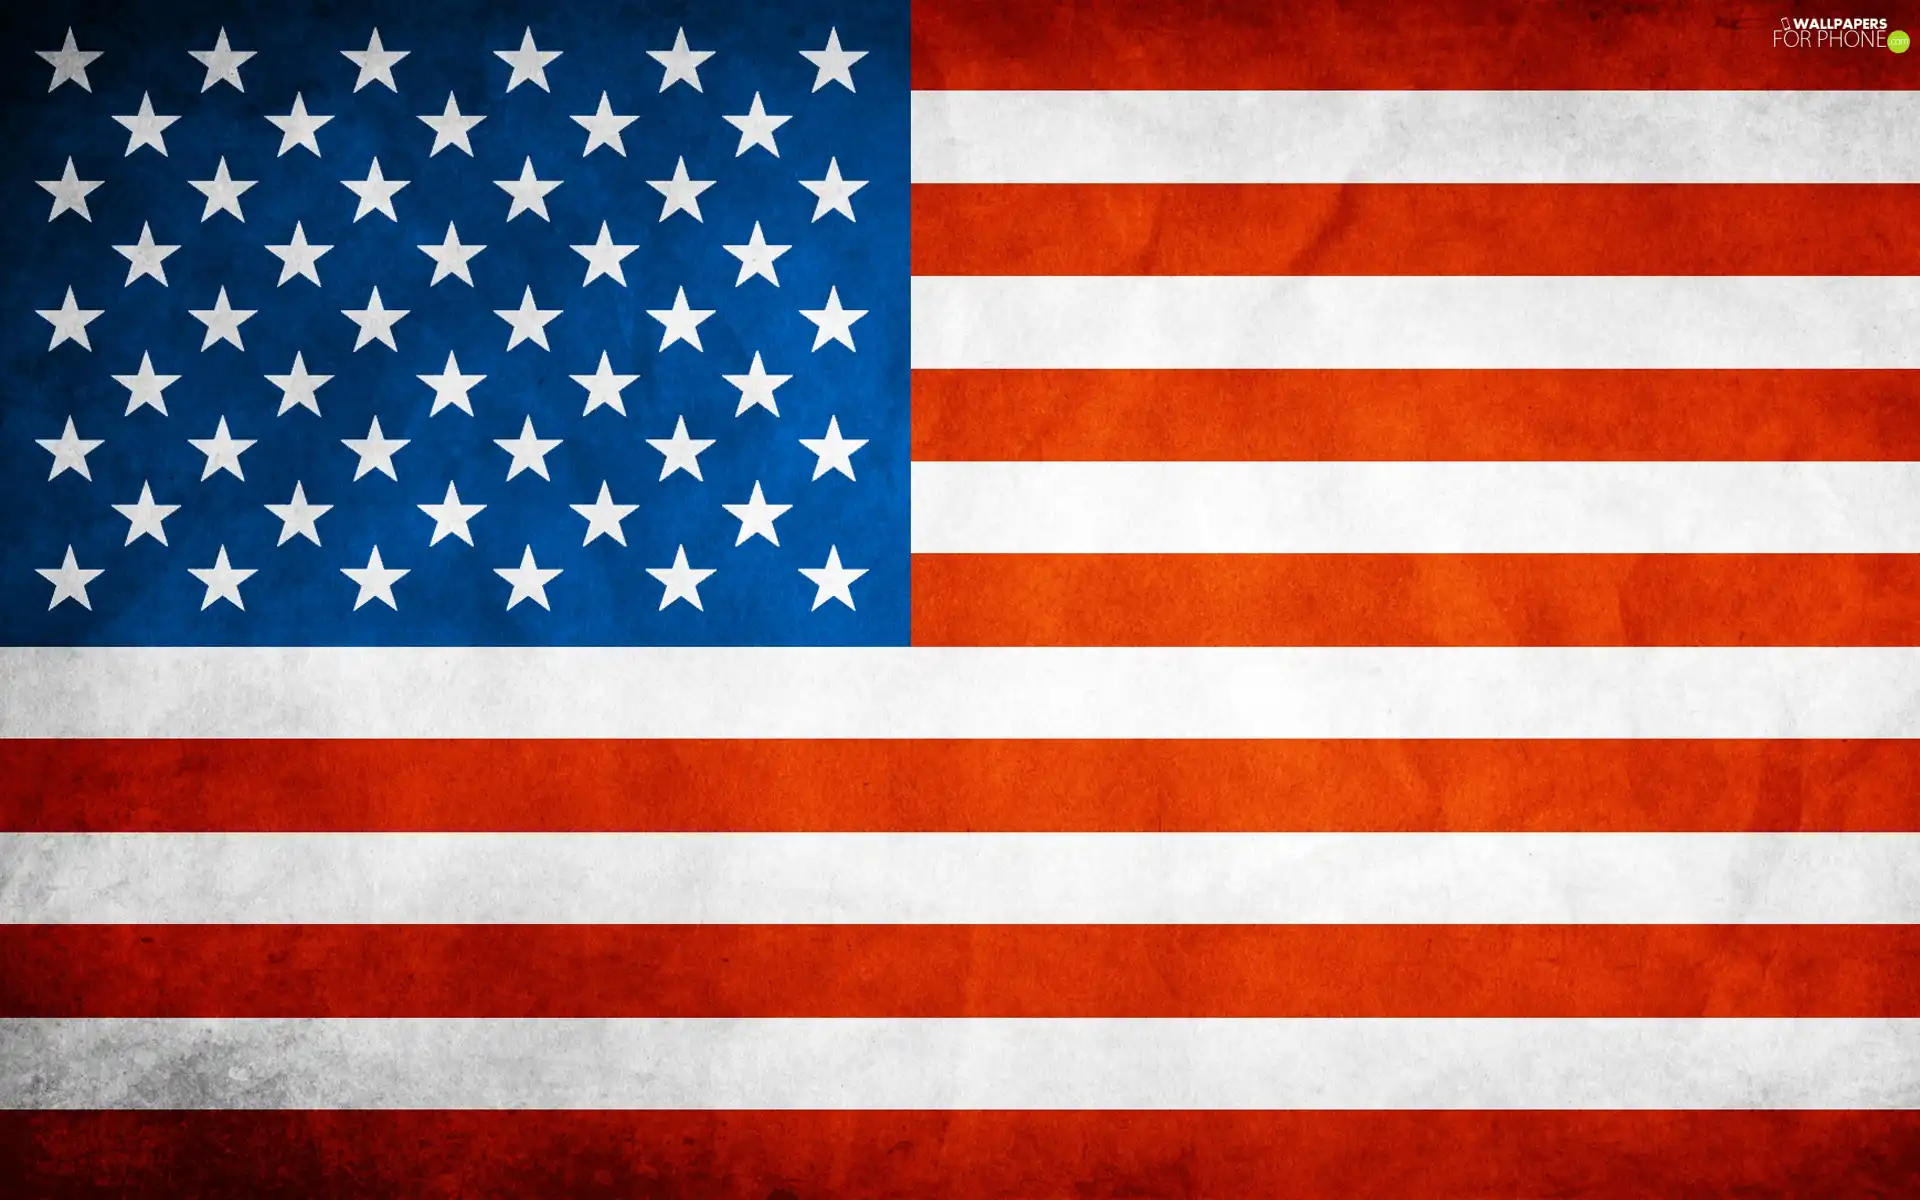 The United States, flag, Member